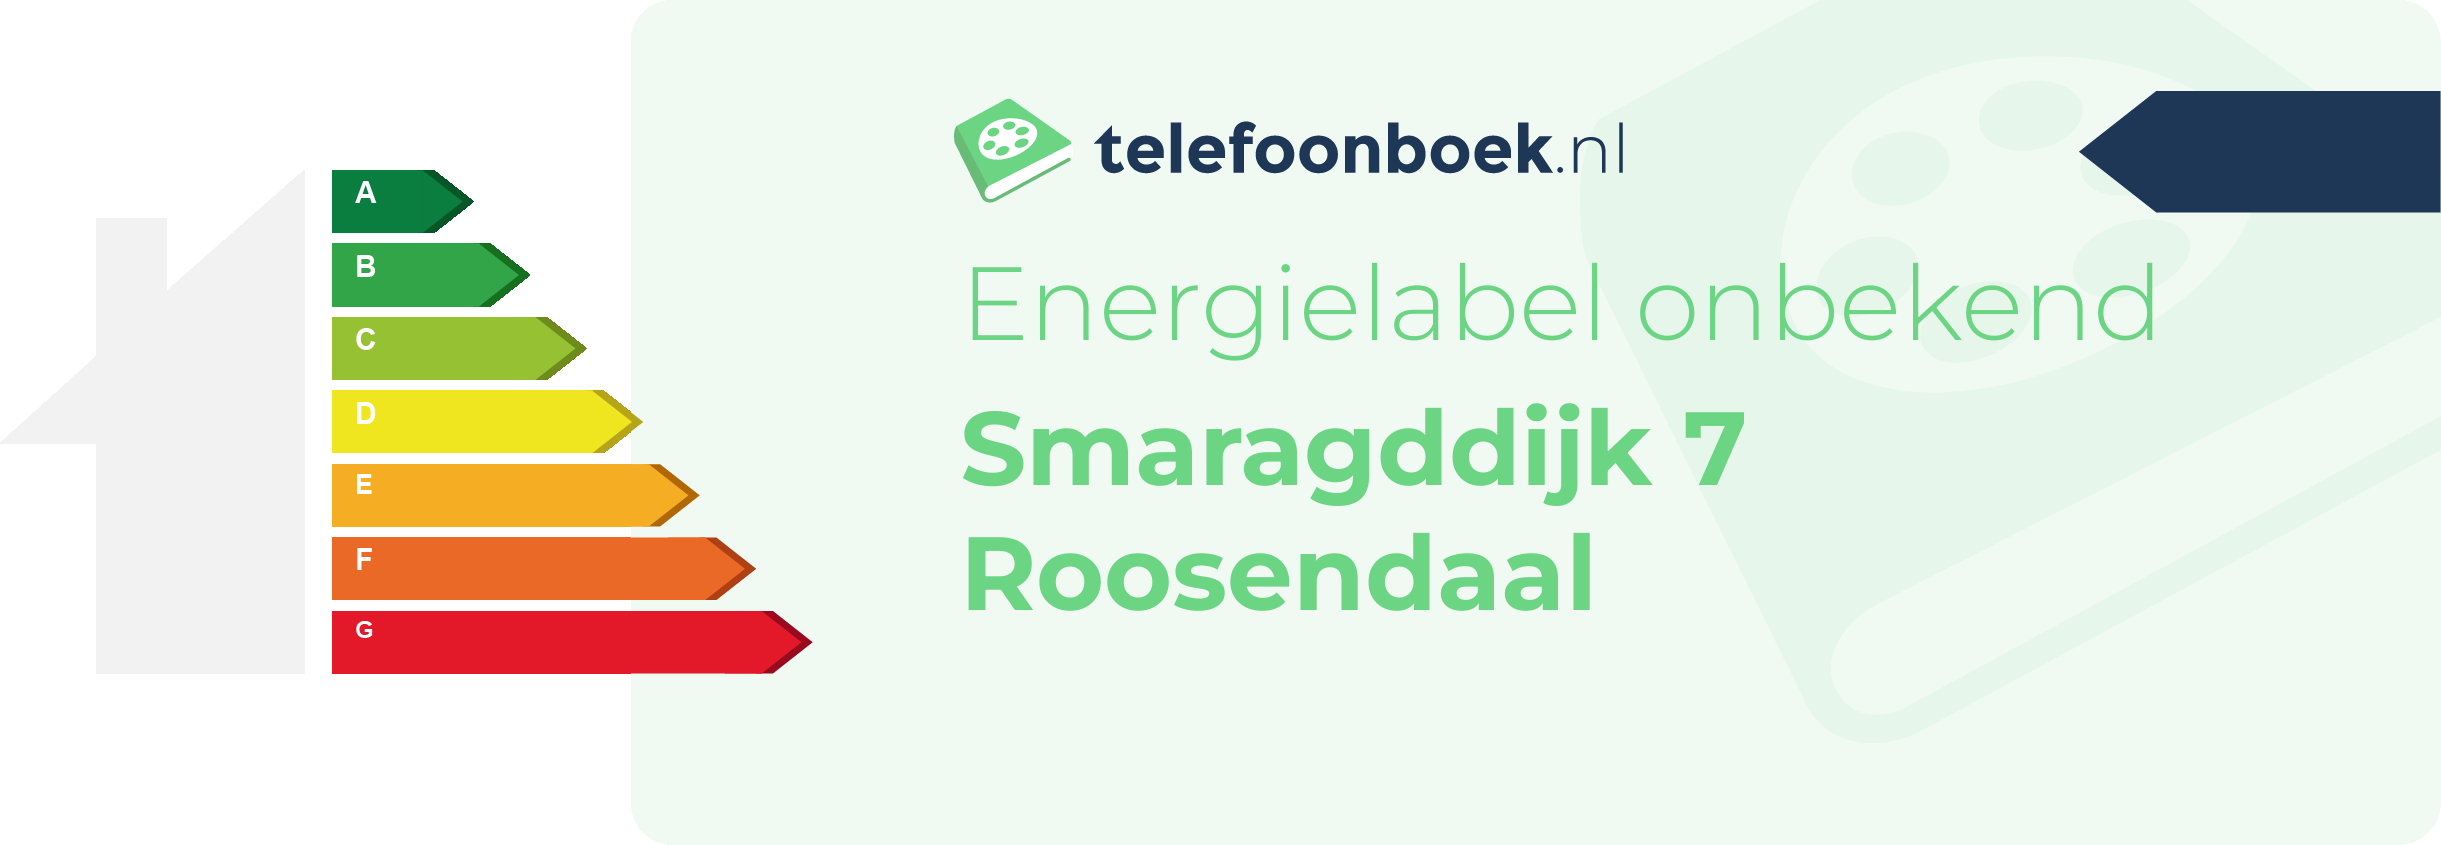 Energielabel Smaragddijk 7 Roosendaal